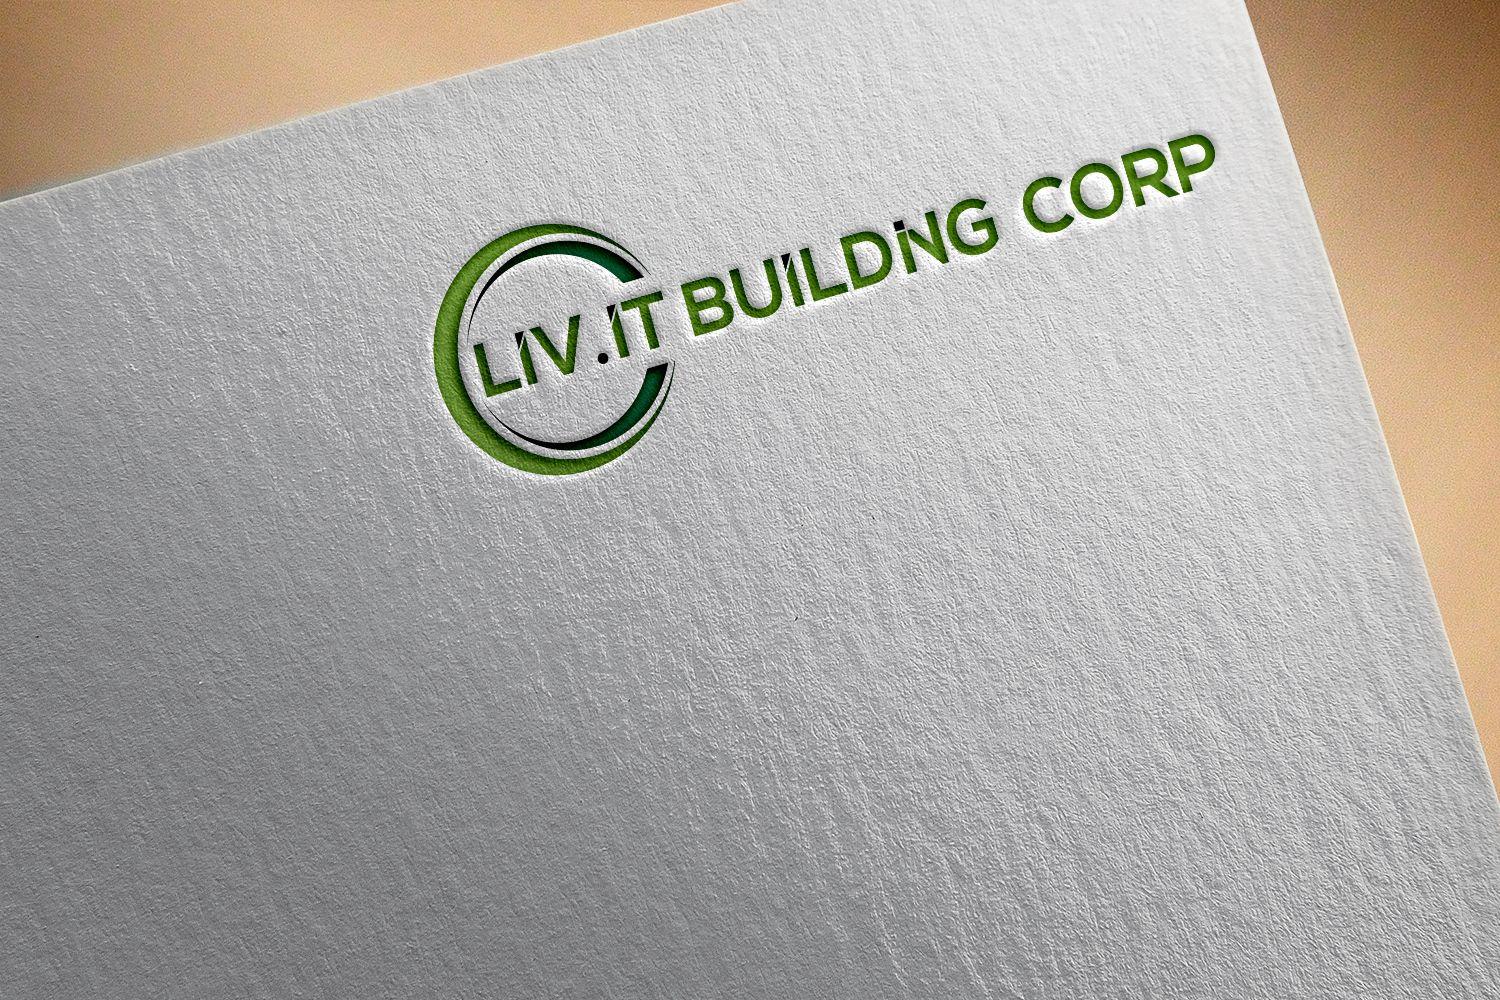 Buiilding Roman Company Logo - Professional, Conservative, Construction Company Logo Design for LIV